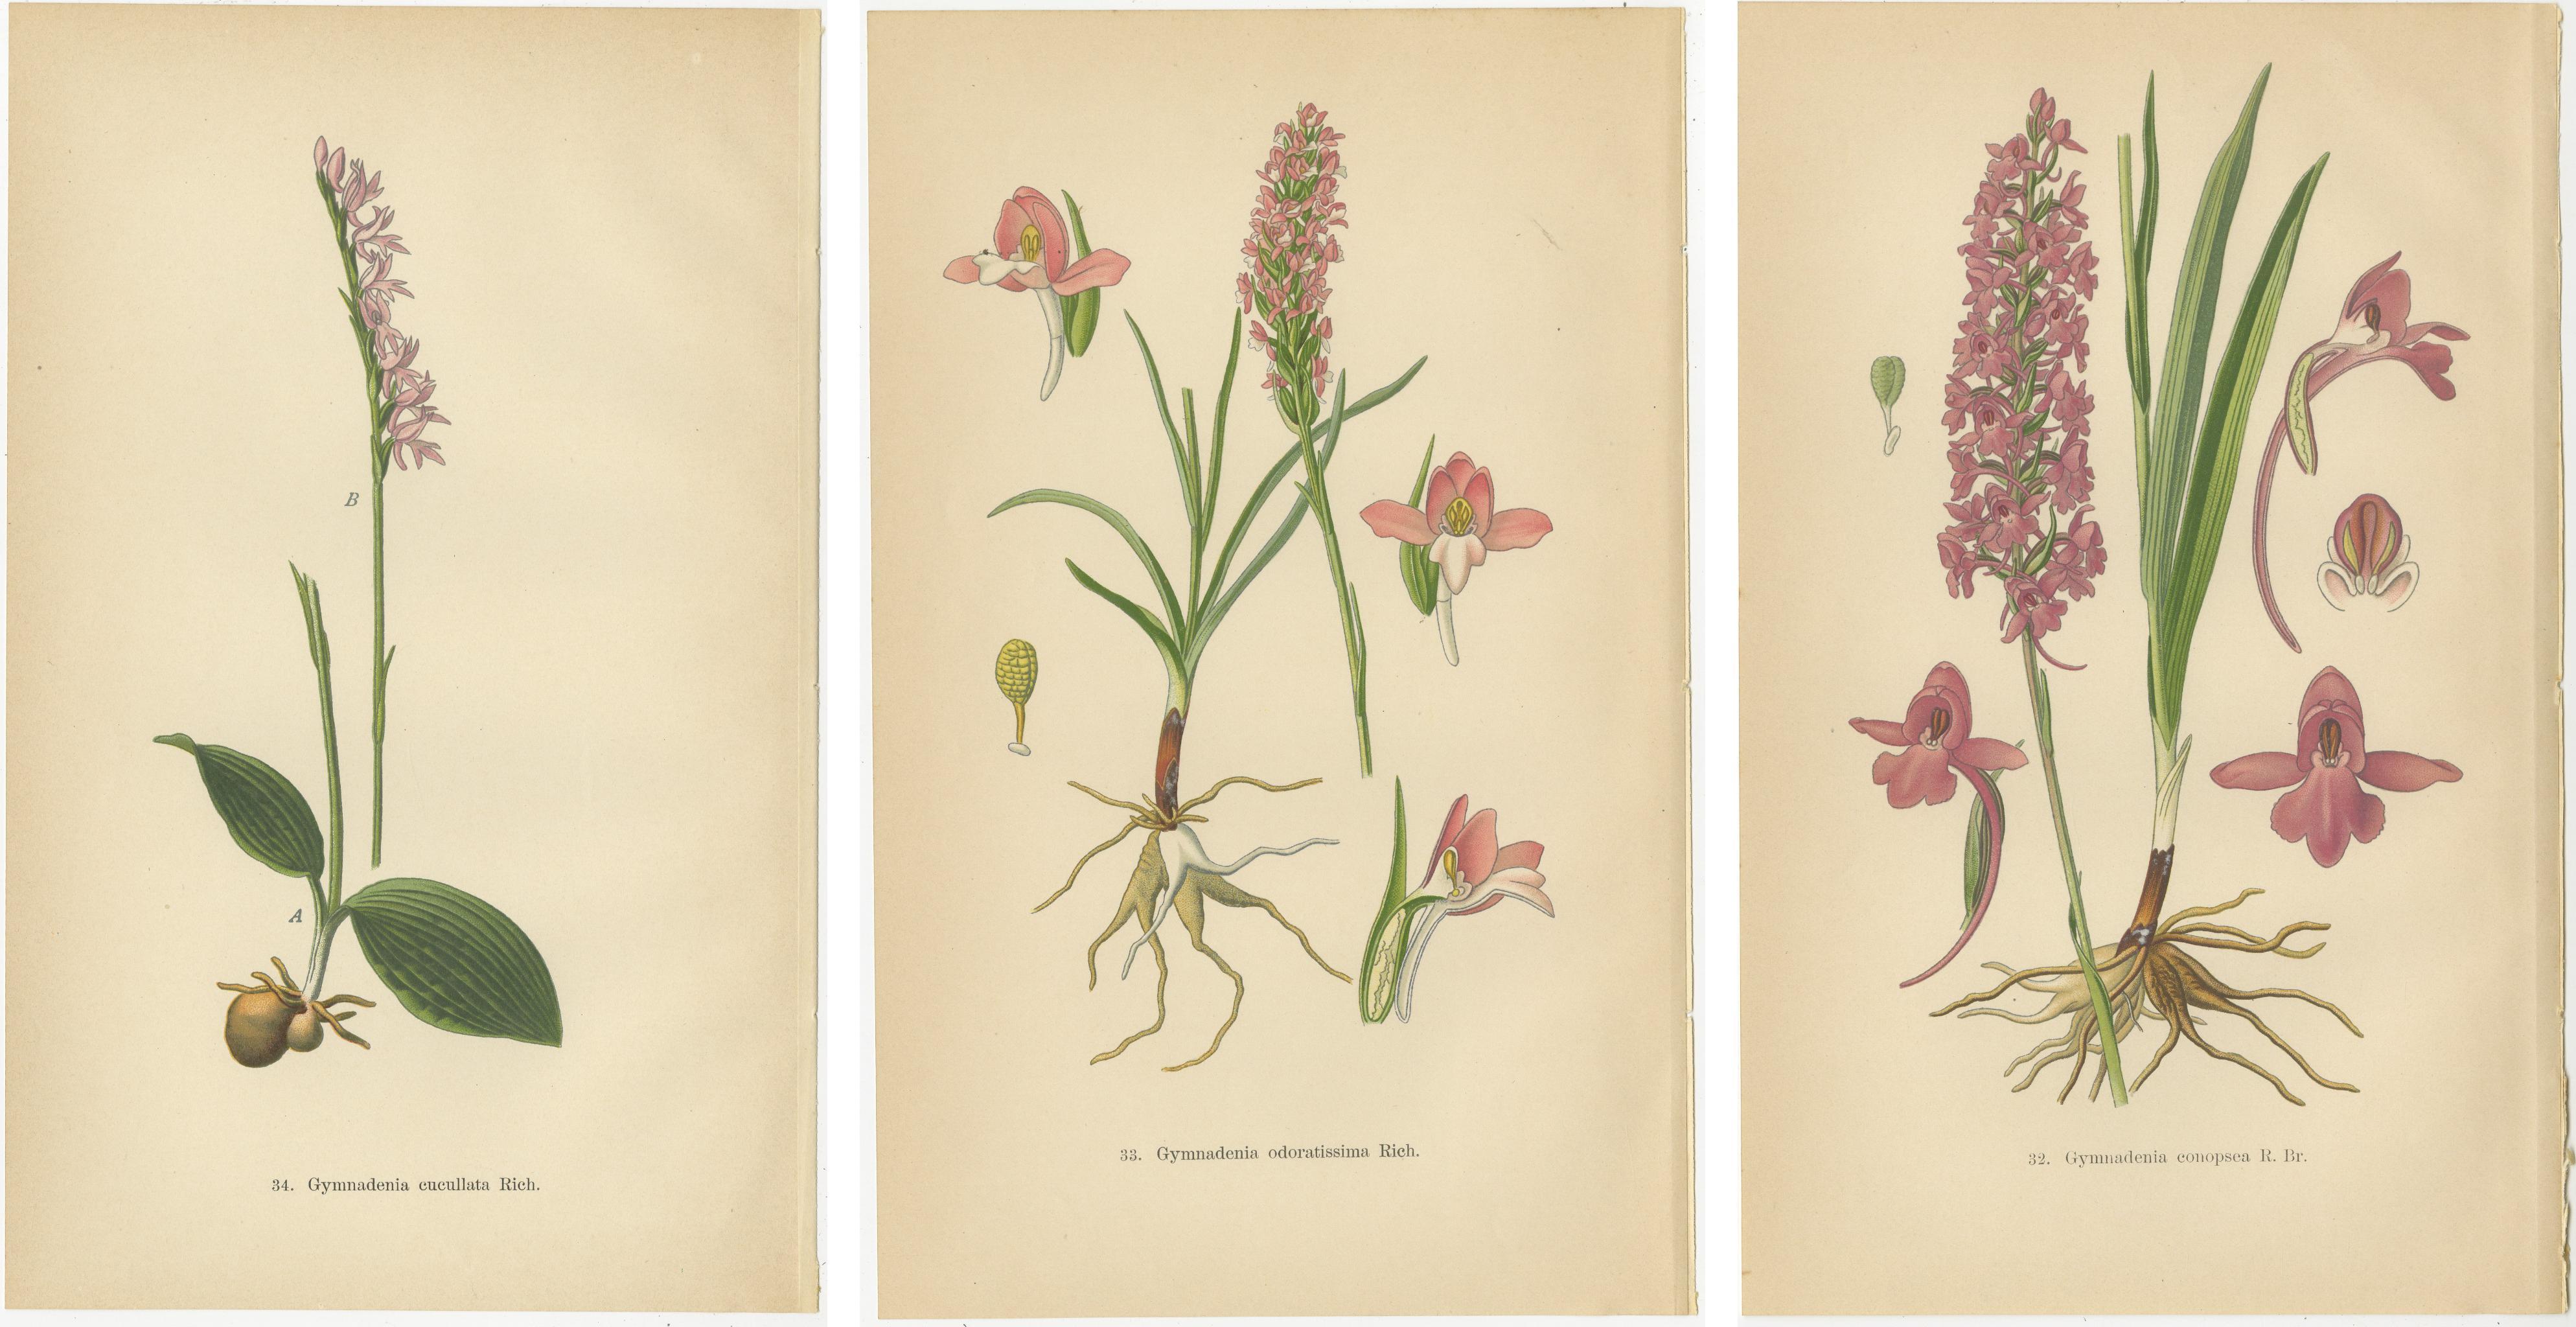 Paper Orchid Elegance: Walter Müller’s Botanical Art from 1904